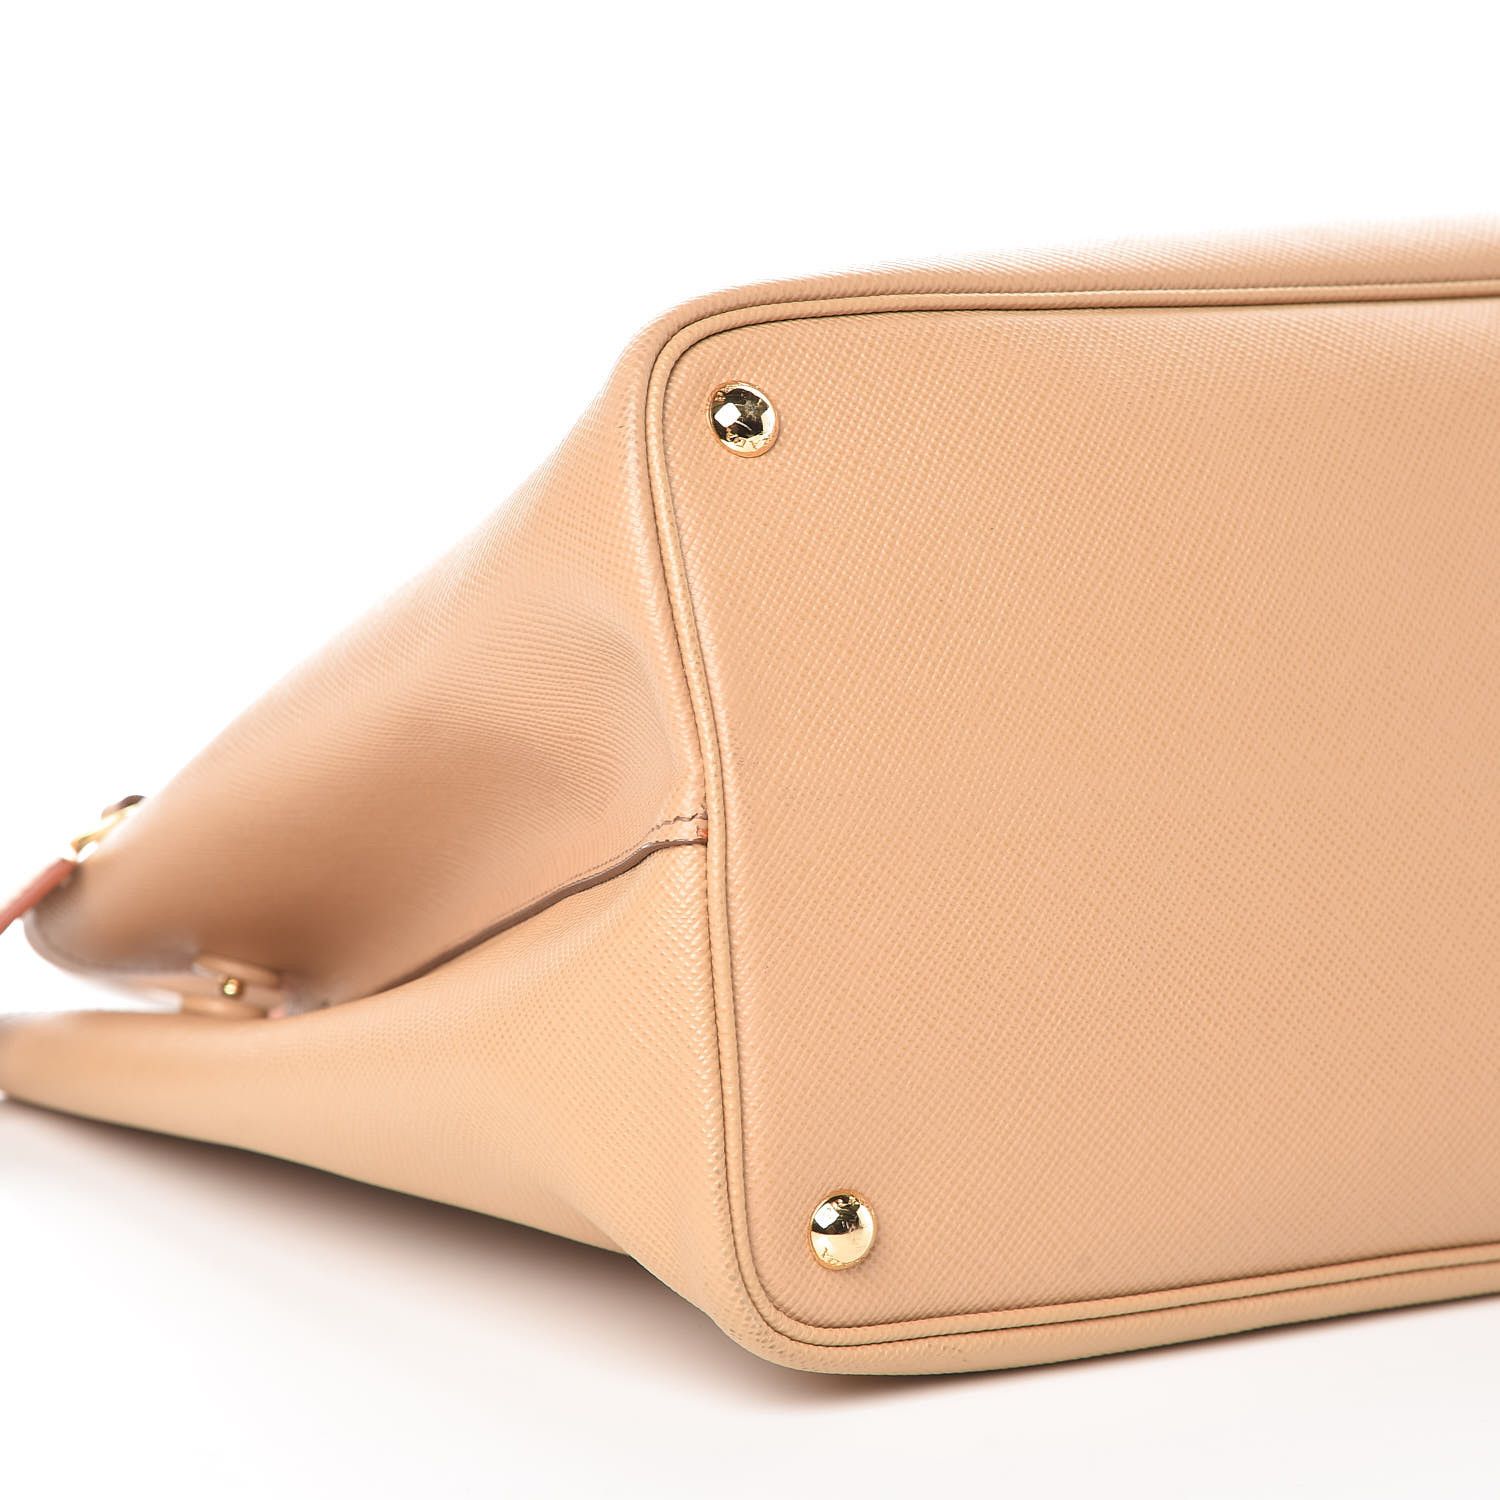 PRADA Saffiano Cuir Medium Double Bag Noisette Papaya | Fashionphile